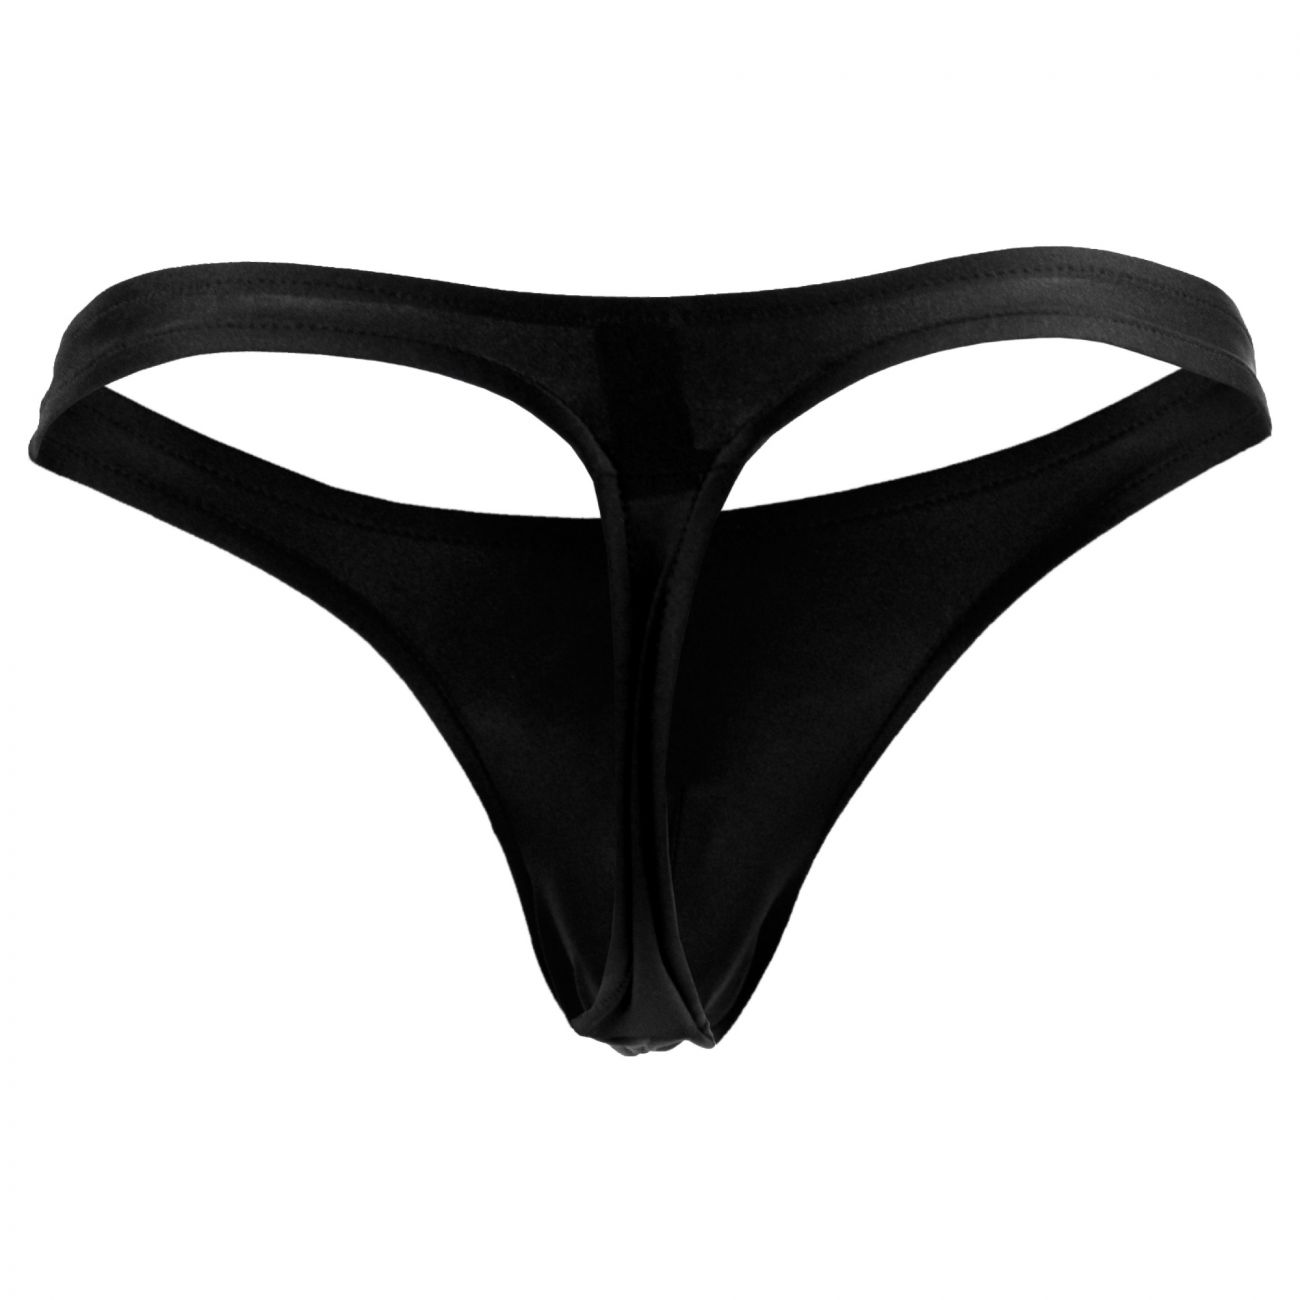 Mens Underwear: Male Power PAK801 Bong Thong | eBay